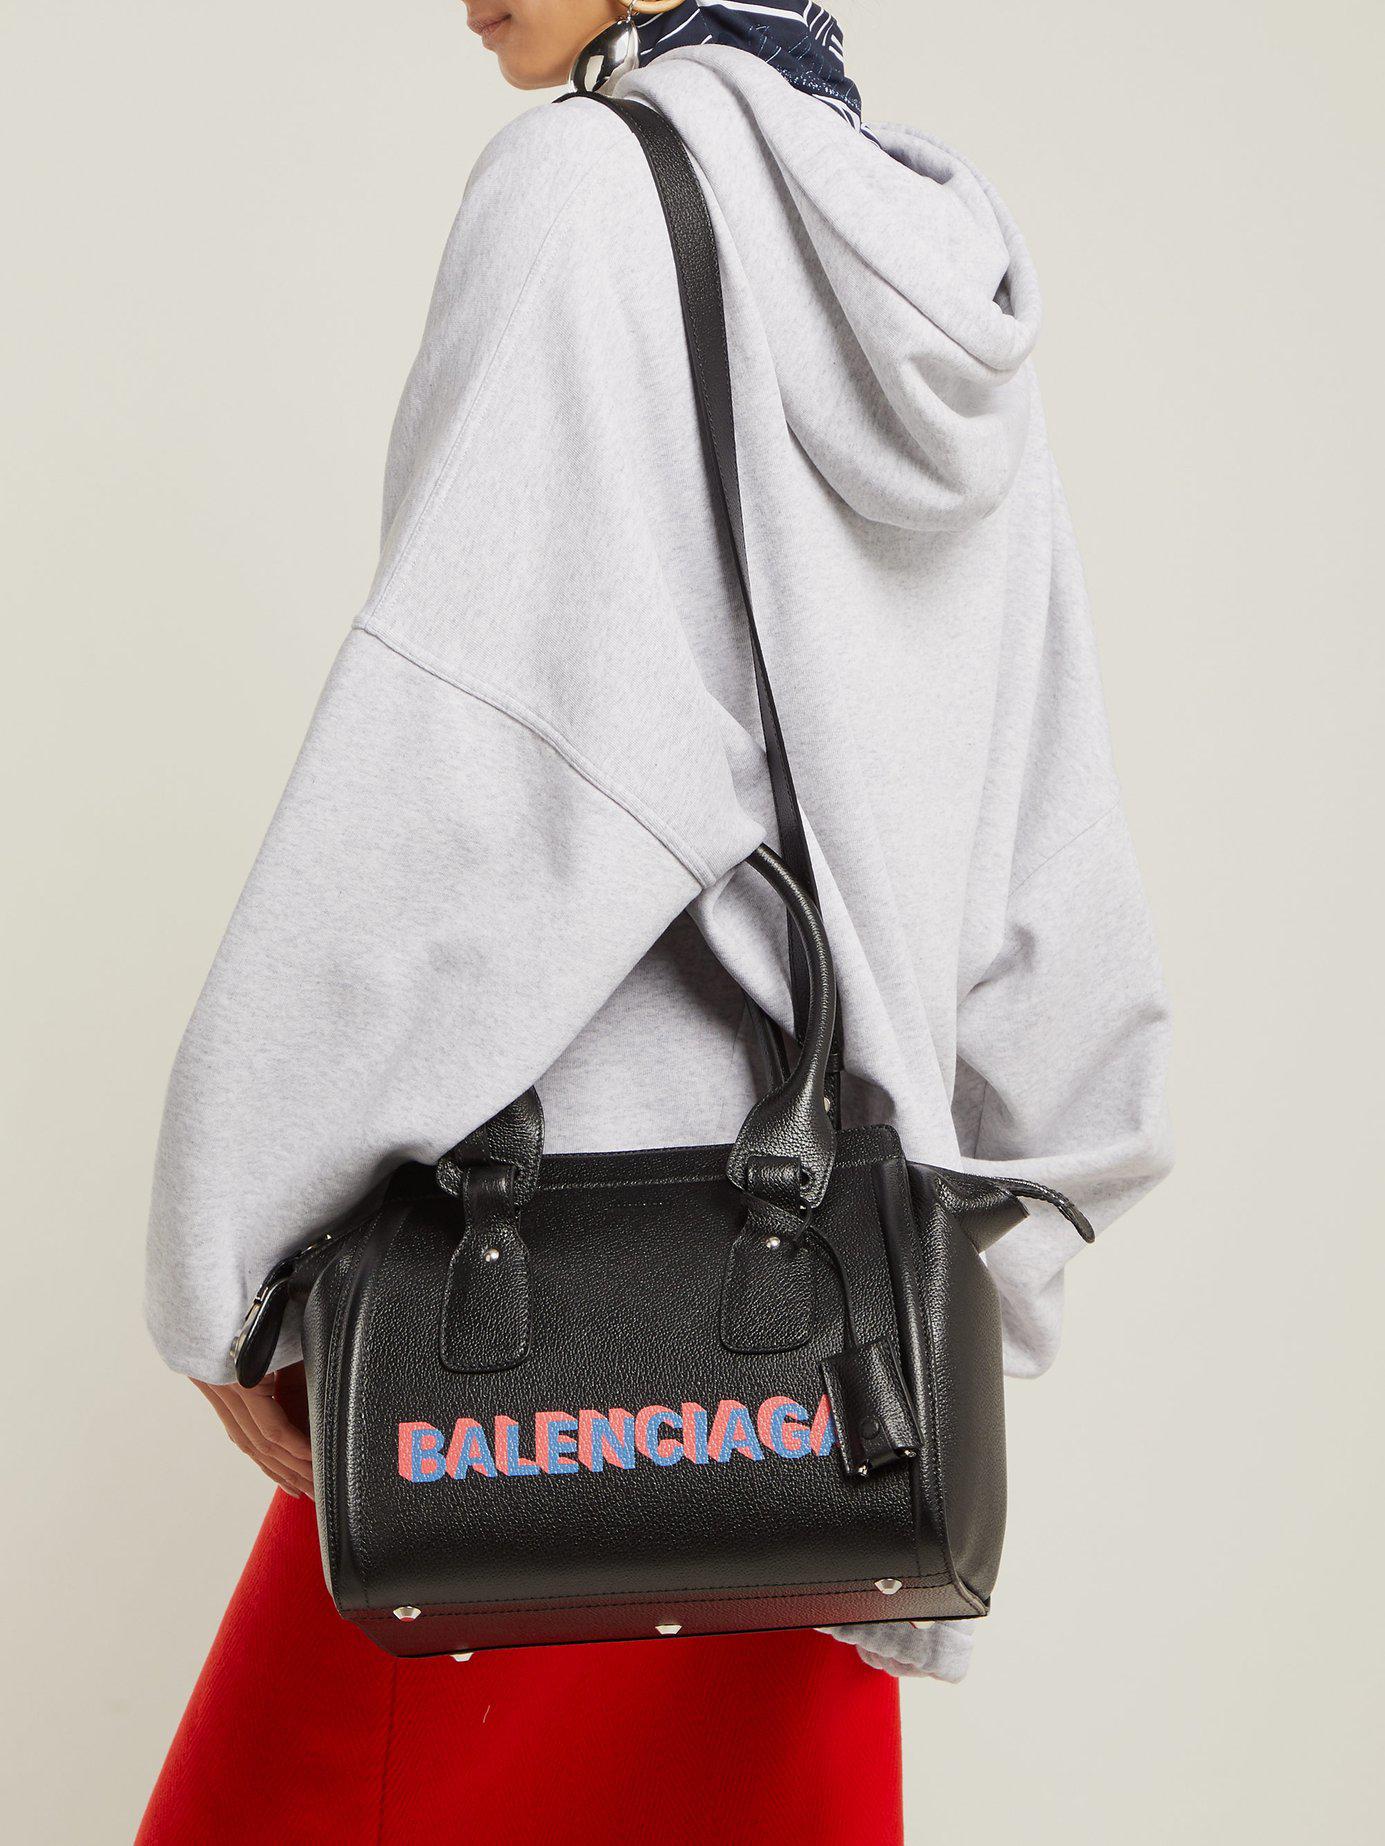 Balenciaga Monday Logo Print Leather Bowling Bag in Black - Lyst